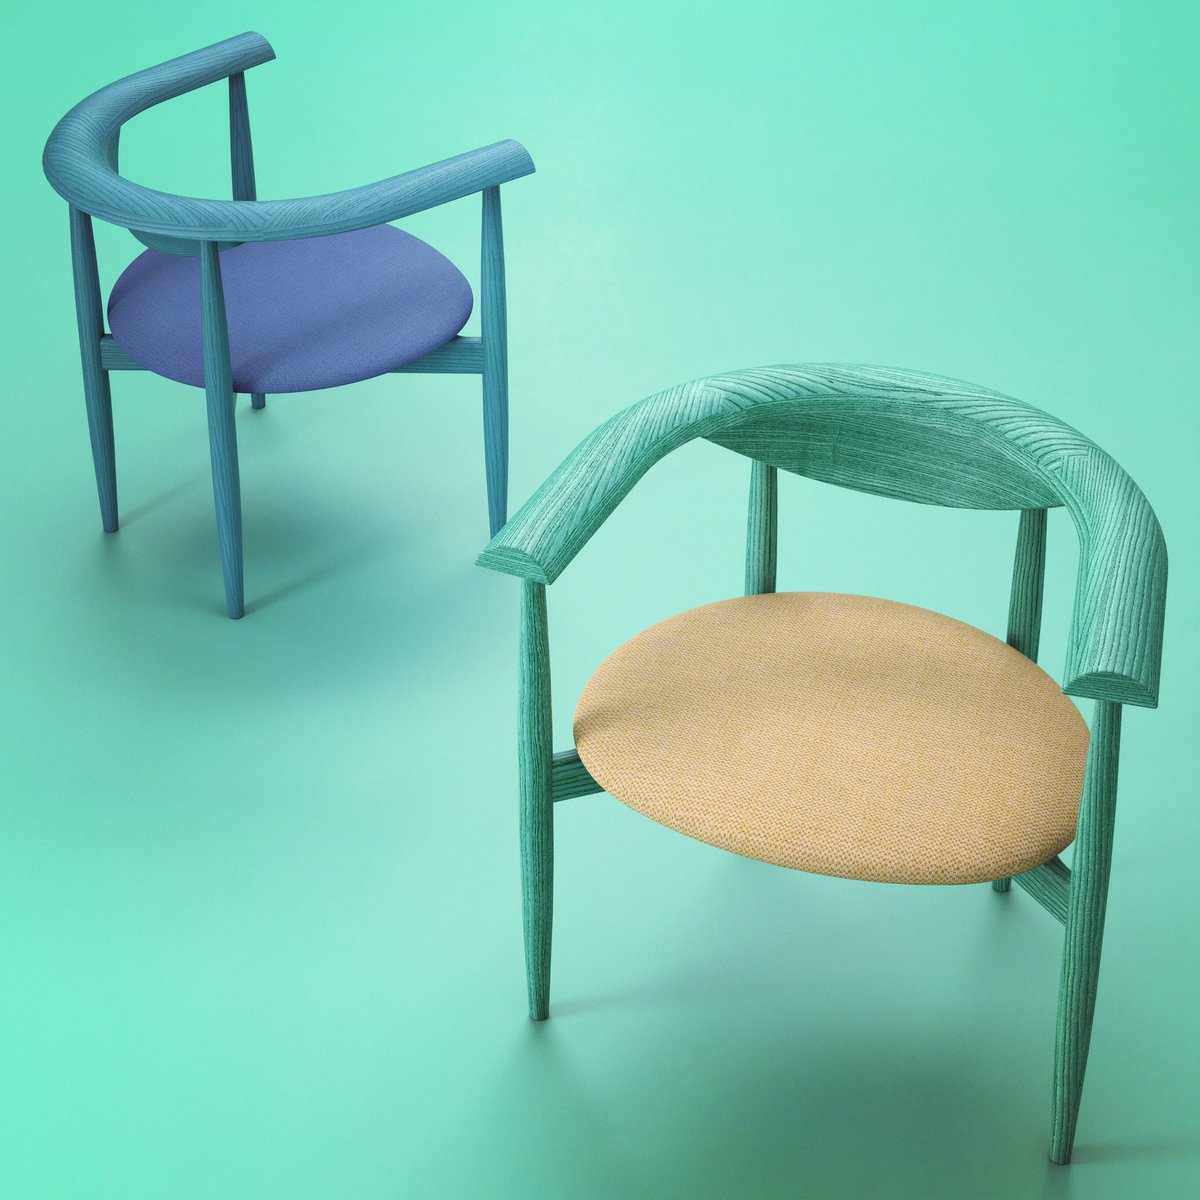 Logger

Arm chair

2004

Designed by Tsuguji Sasaki 

#tsugujisasaki #design #designer #productdesign #furnituredesign #furniture #modern #modernchair #moderndesignfurniture #contemporary #woodworking #decor #minimal #minimalism #simpledesign #comfortablechair #coollooks